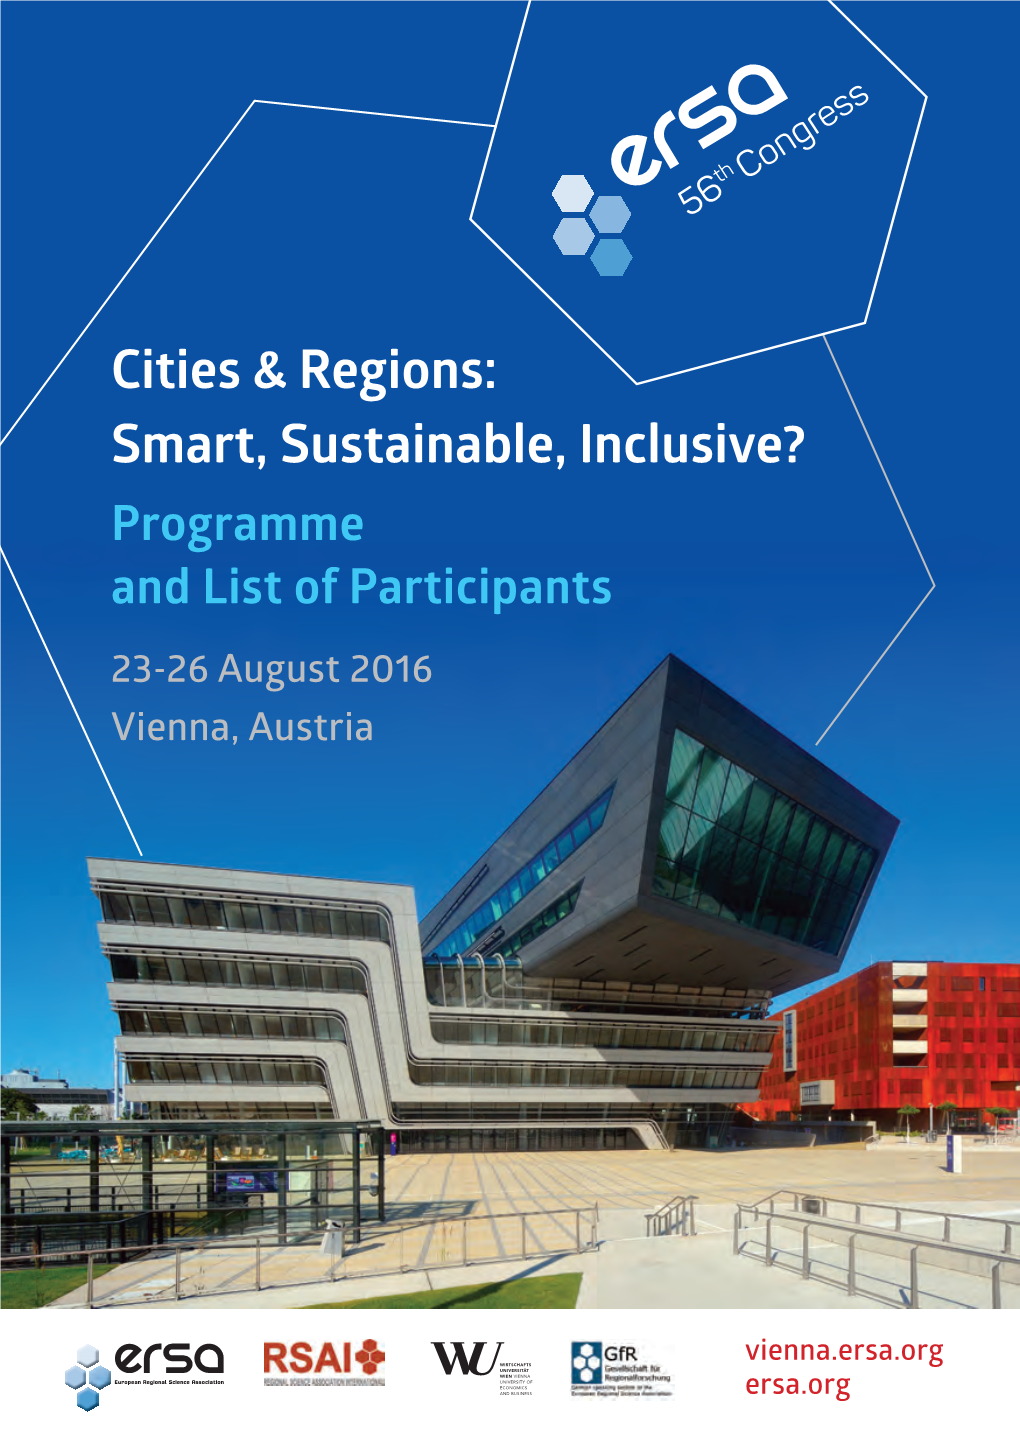 Cities & Regions: Smart, Sustainable, Inclusive?